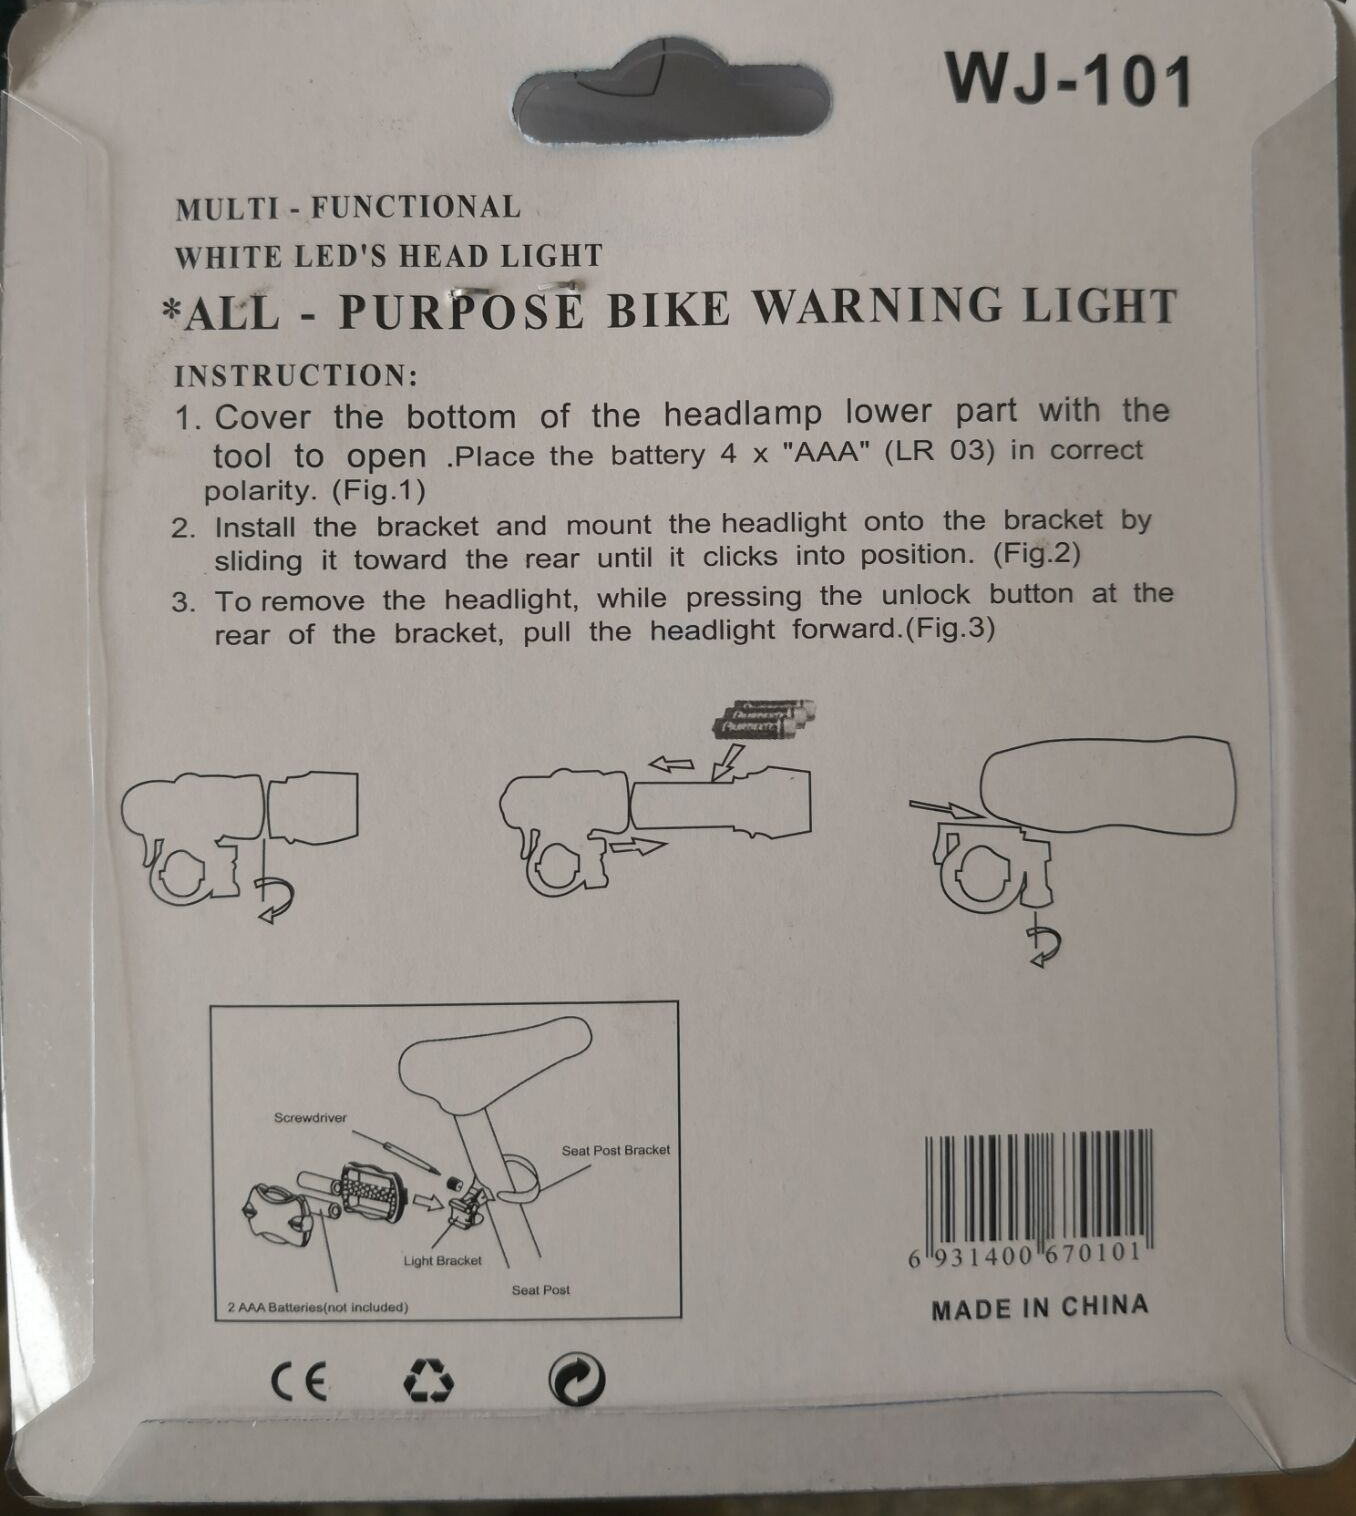 BICYCLE LIGHT